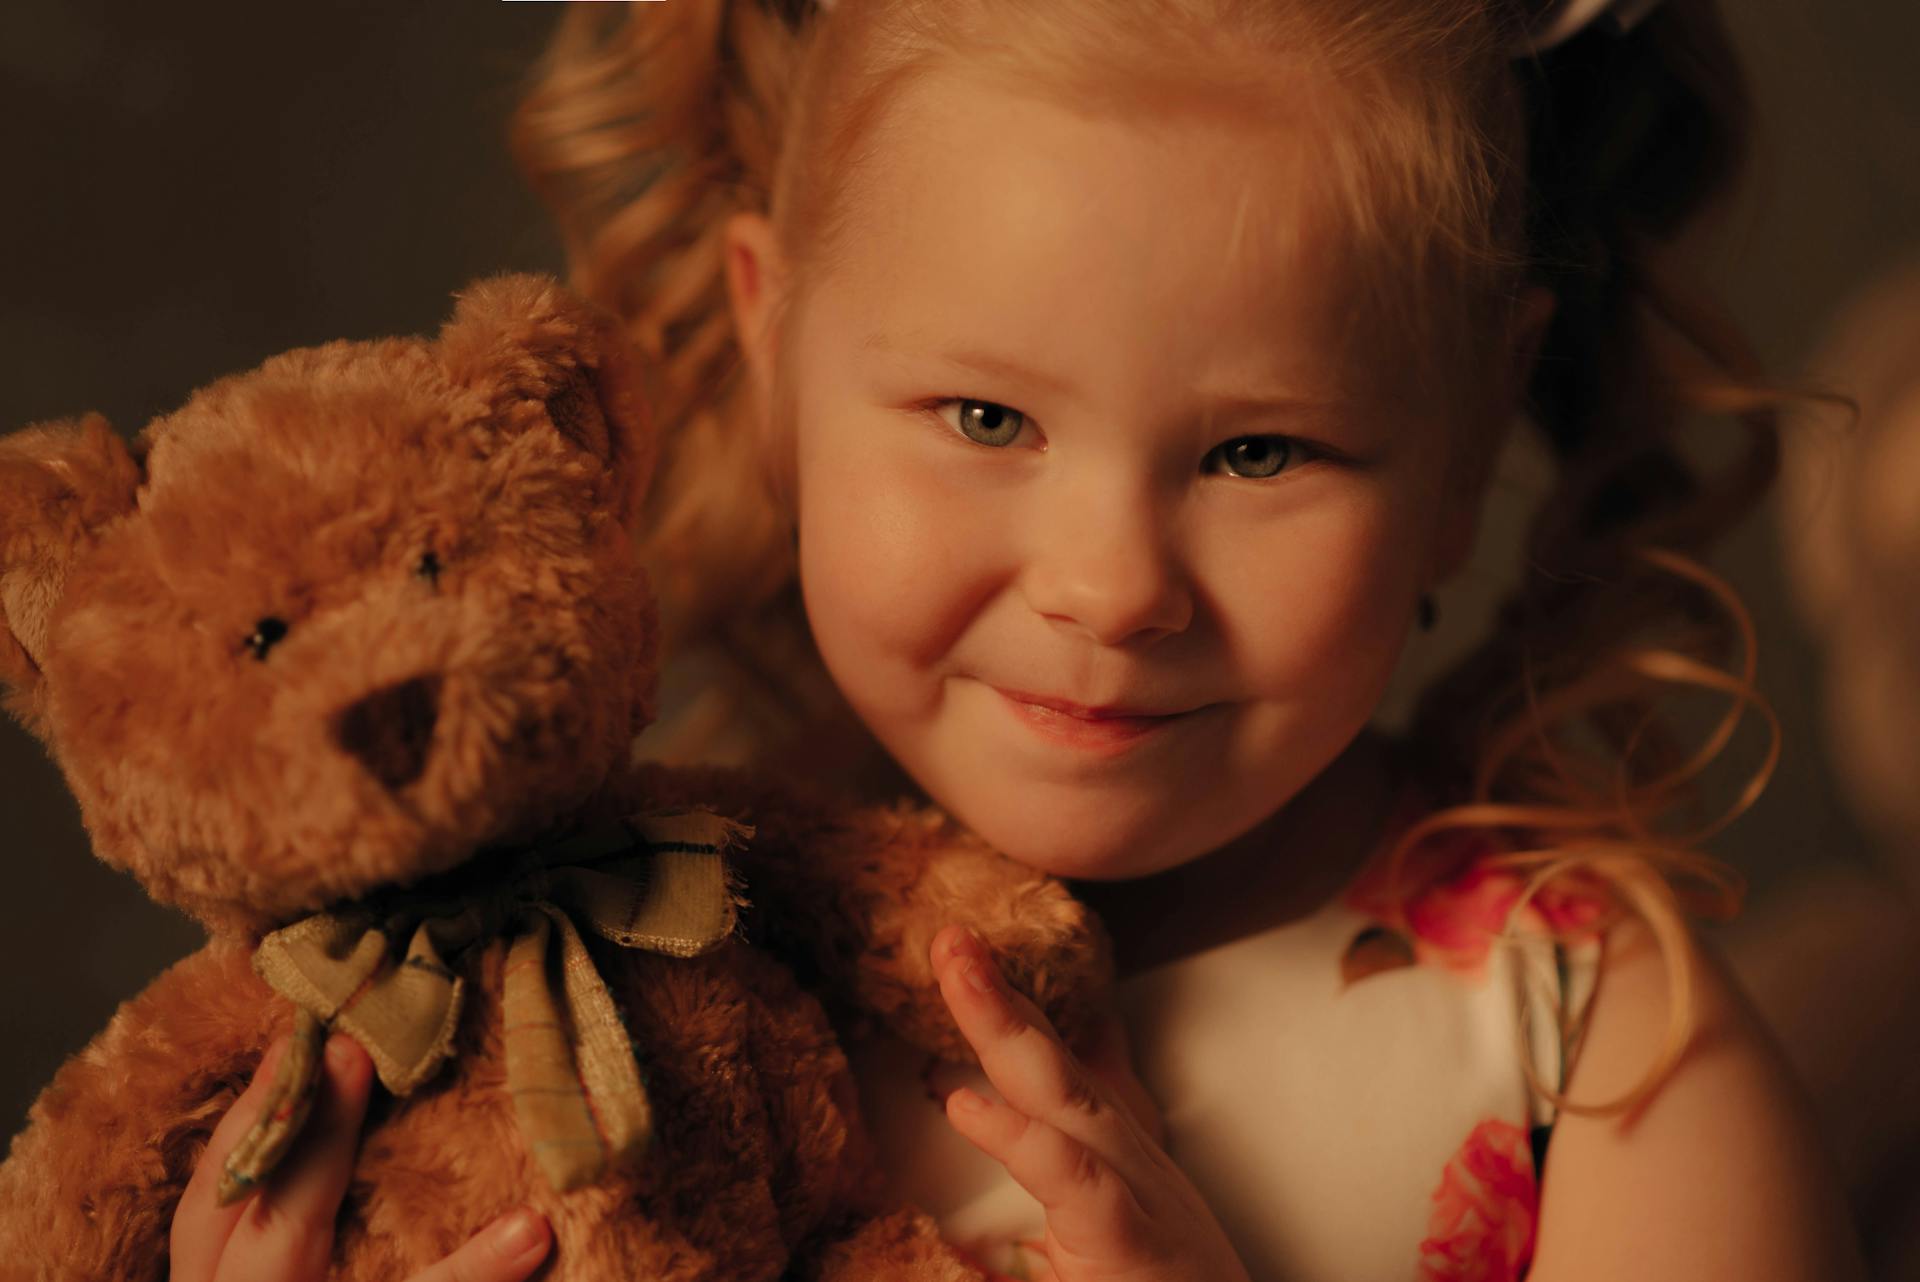 A little girl holding a teddy bear | Source: Pexels